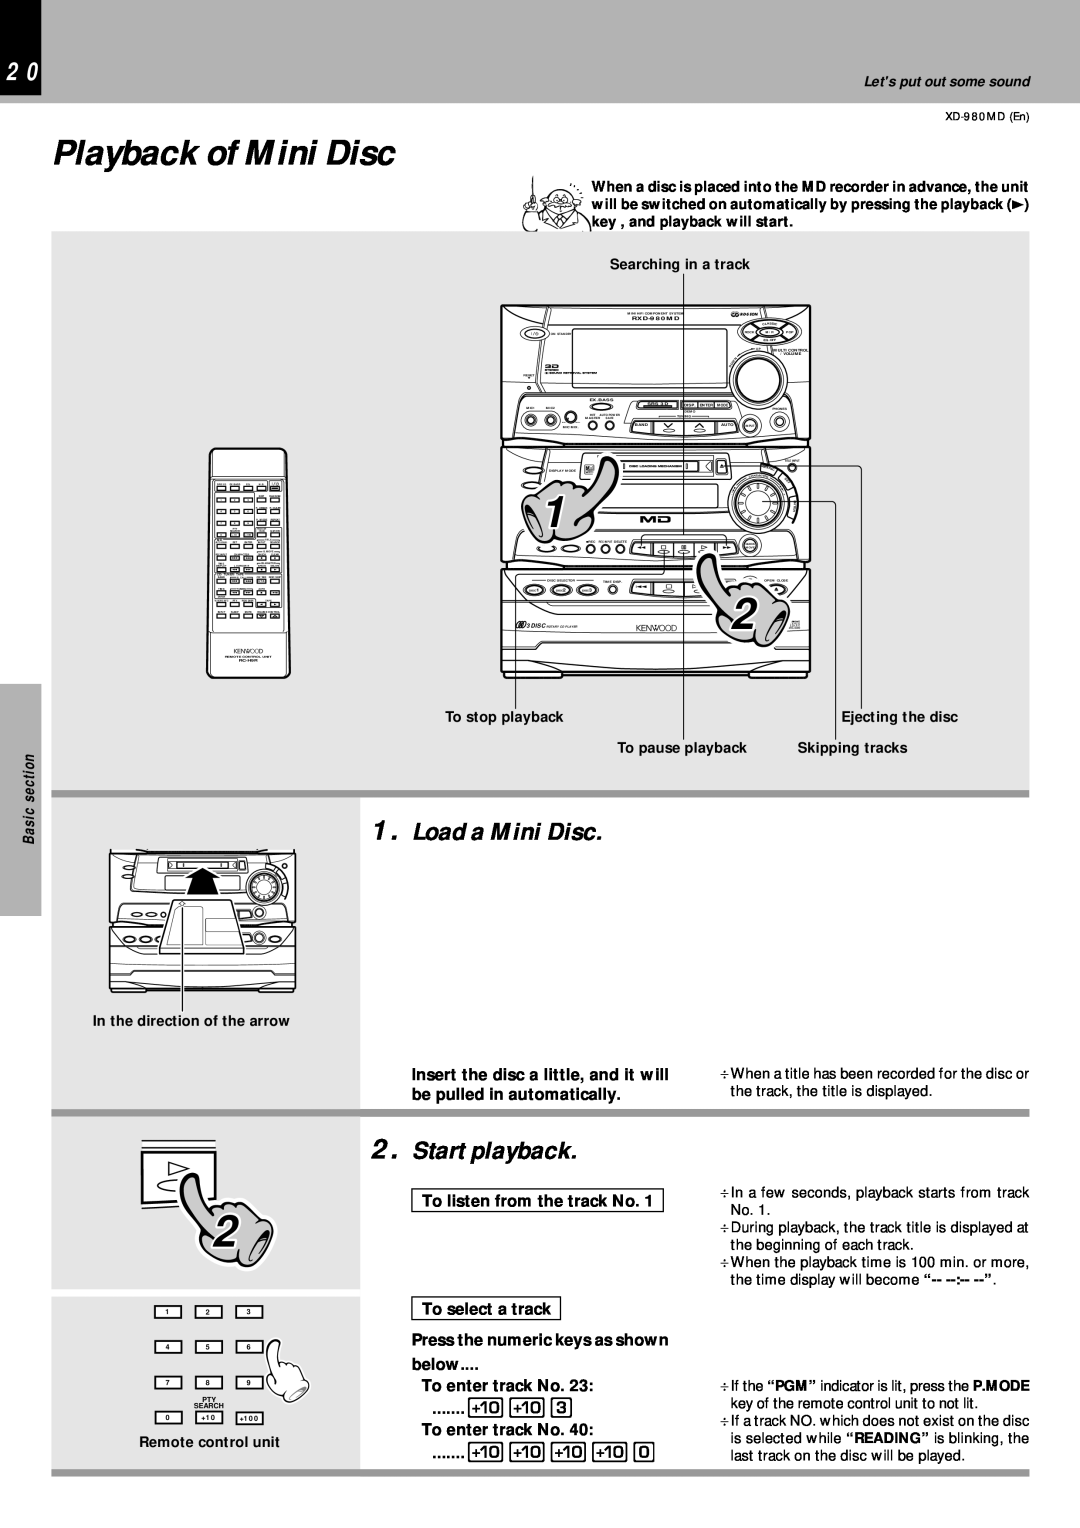 Kenwood XD-980MD instruction manual Playback of Mini Disc, Load a Mini Disc, Start playback 